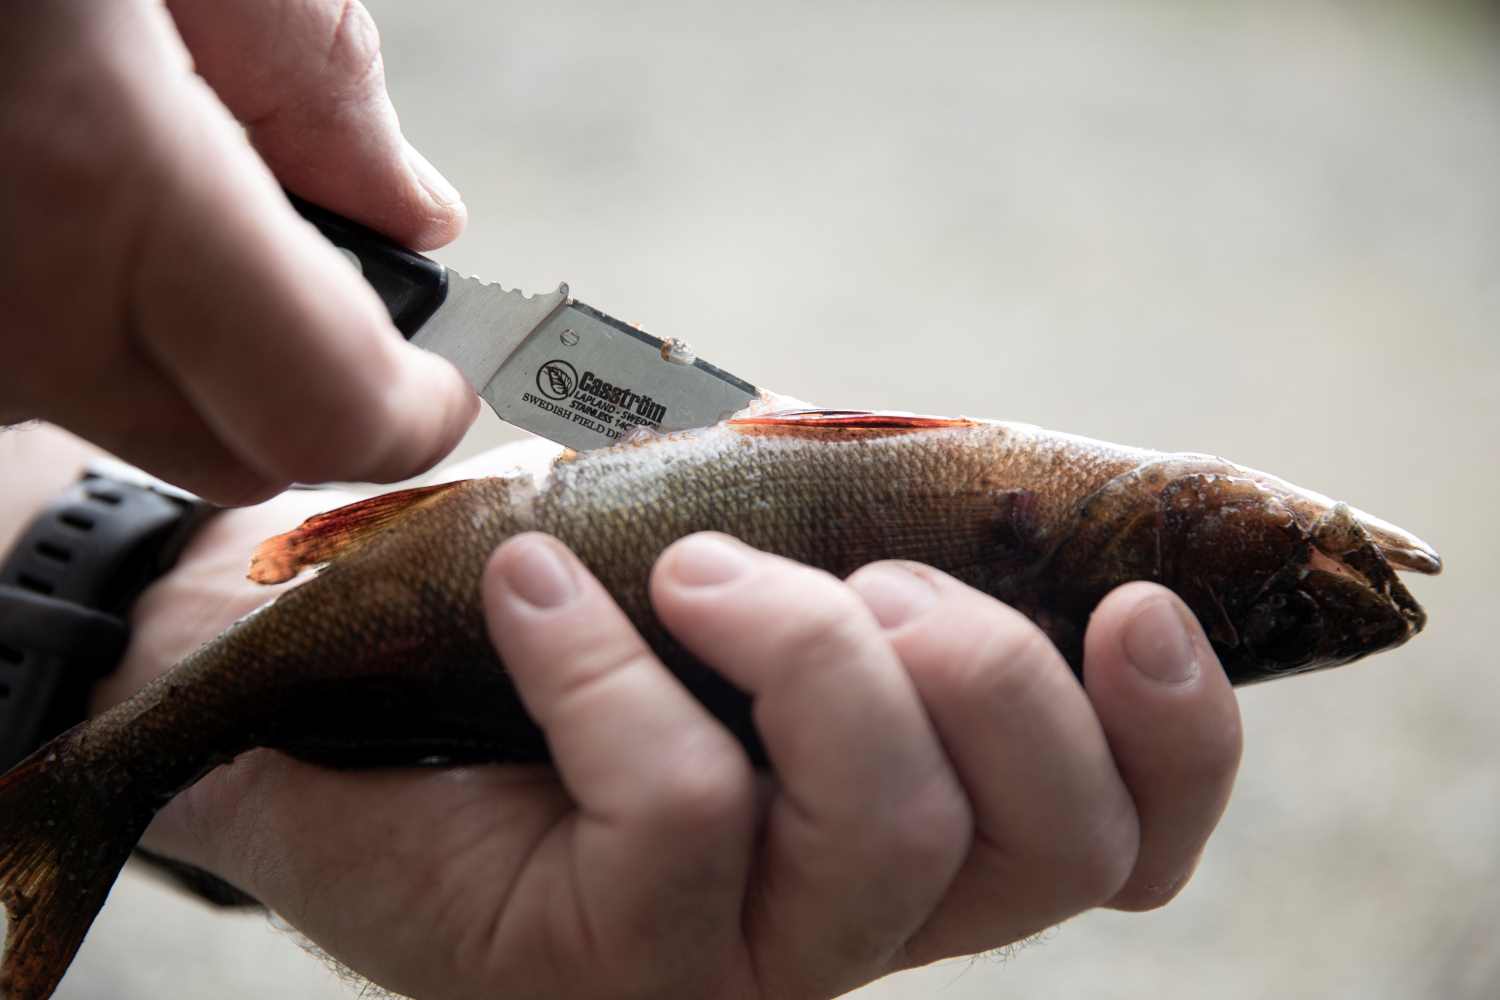 Filleting a fish with the Casström Swedish Field Dresser knife